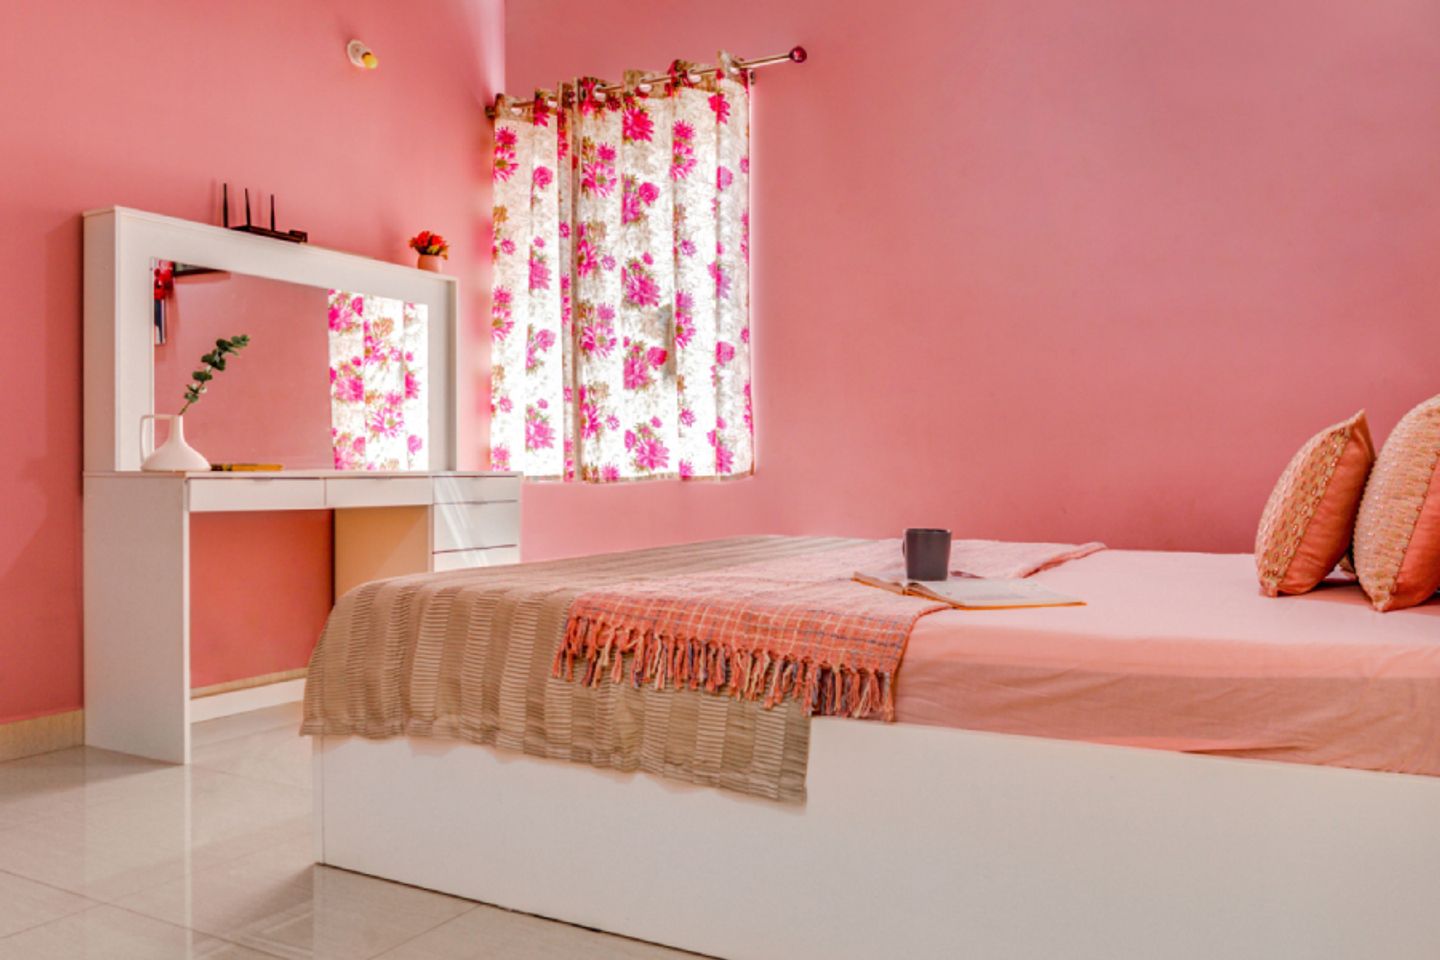 Modern Kids Room Design For Girls With Pink Floral Wallpaper